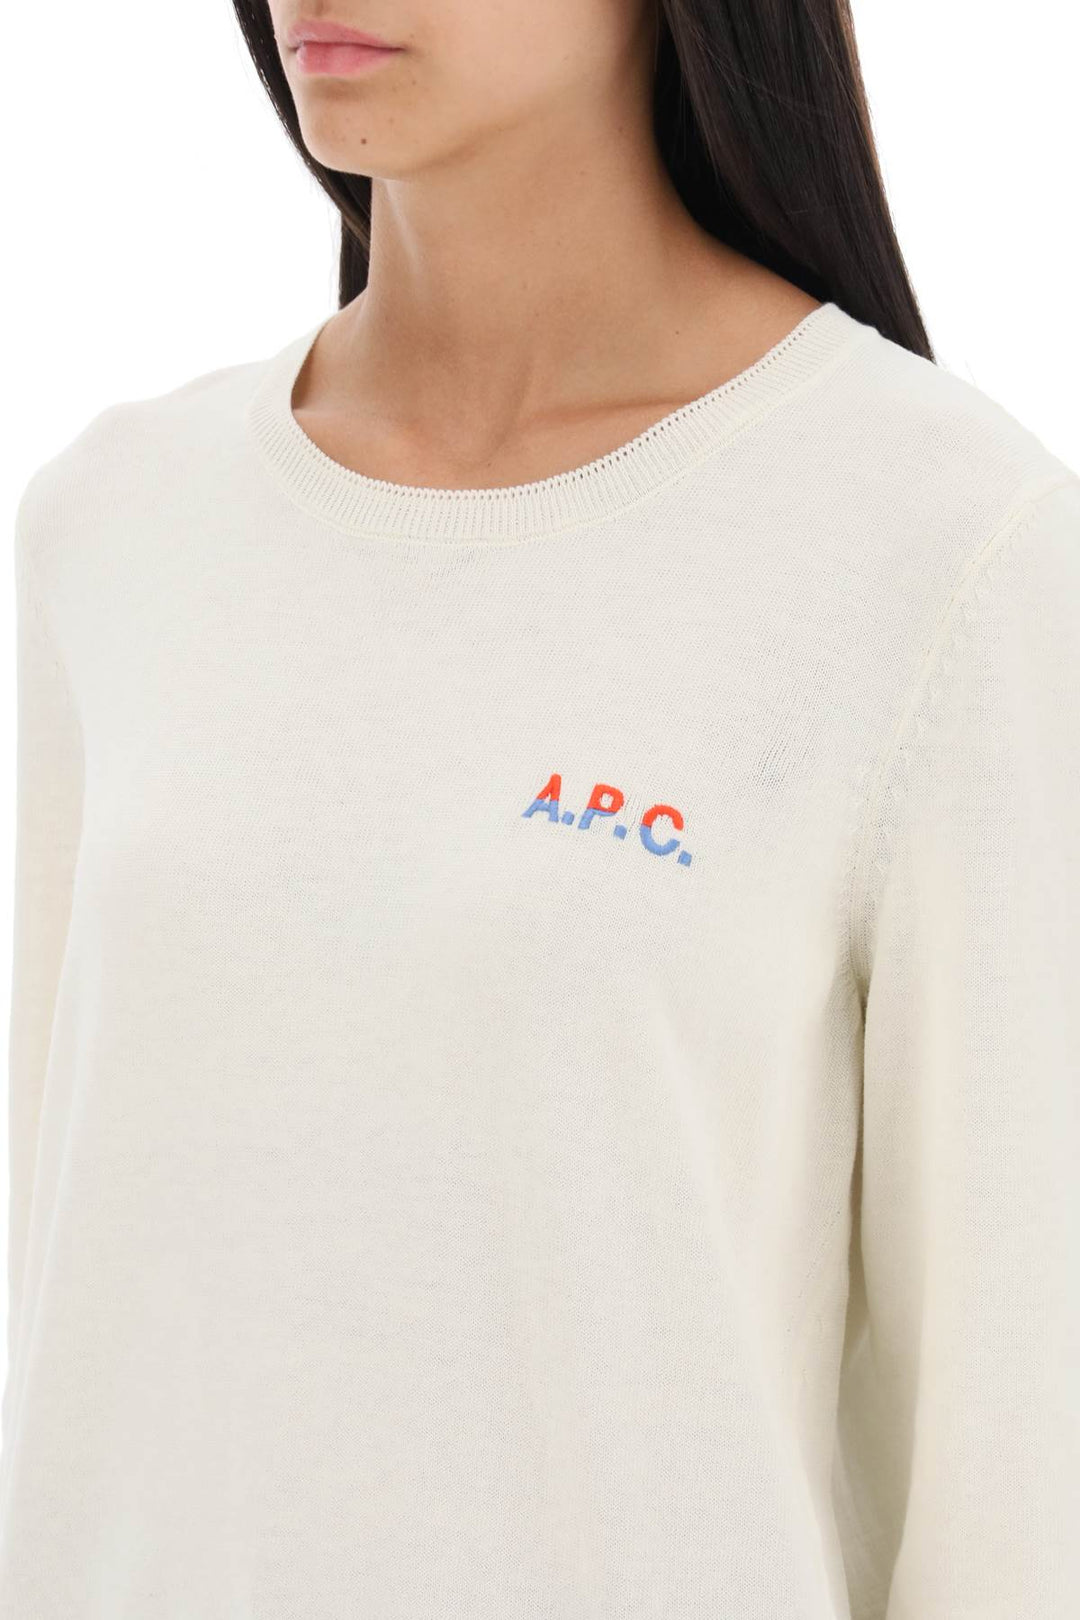 A.P.C. 'Albane' Crew Neck Cotton Sweater   Bianco